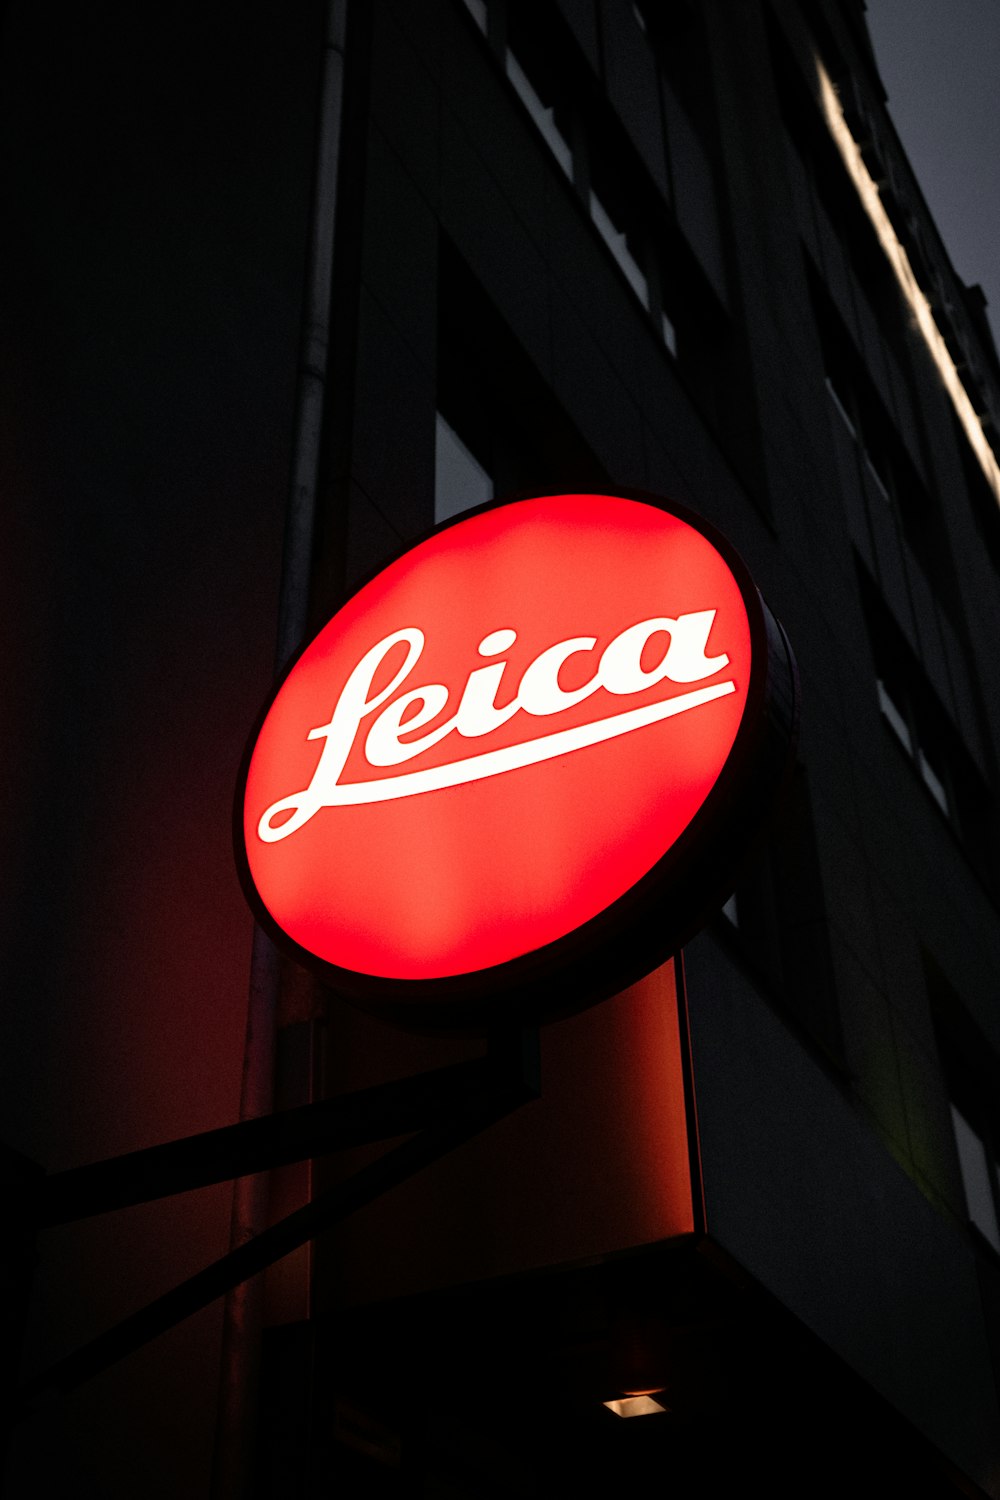 Leica lighted signage